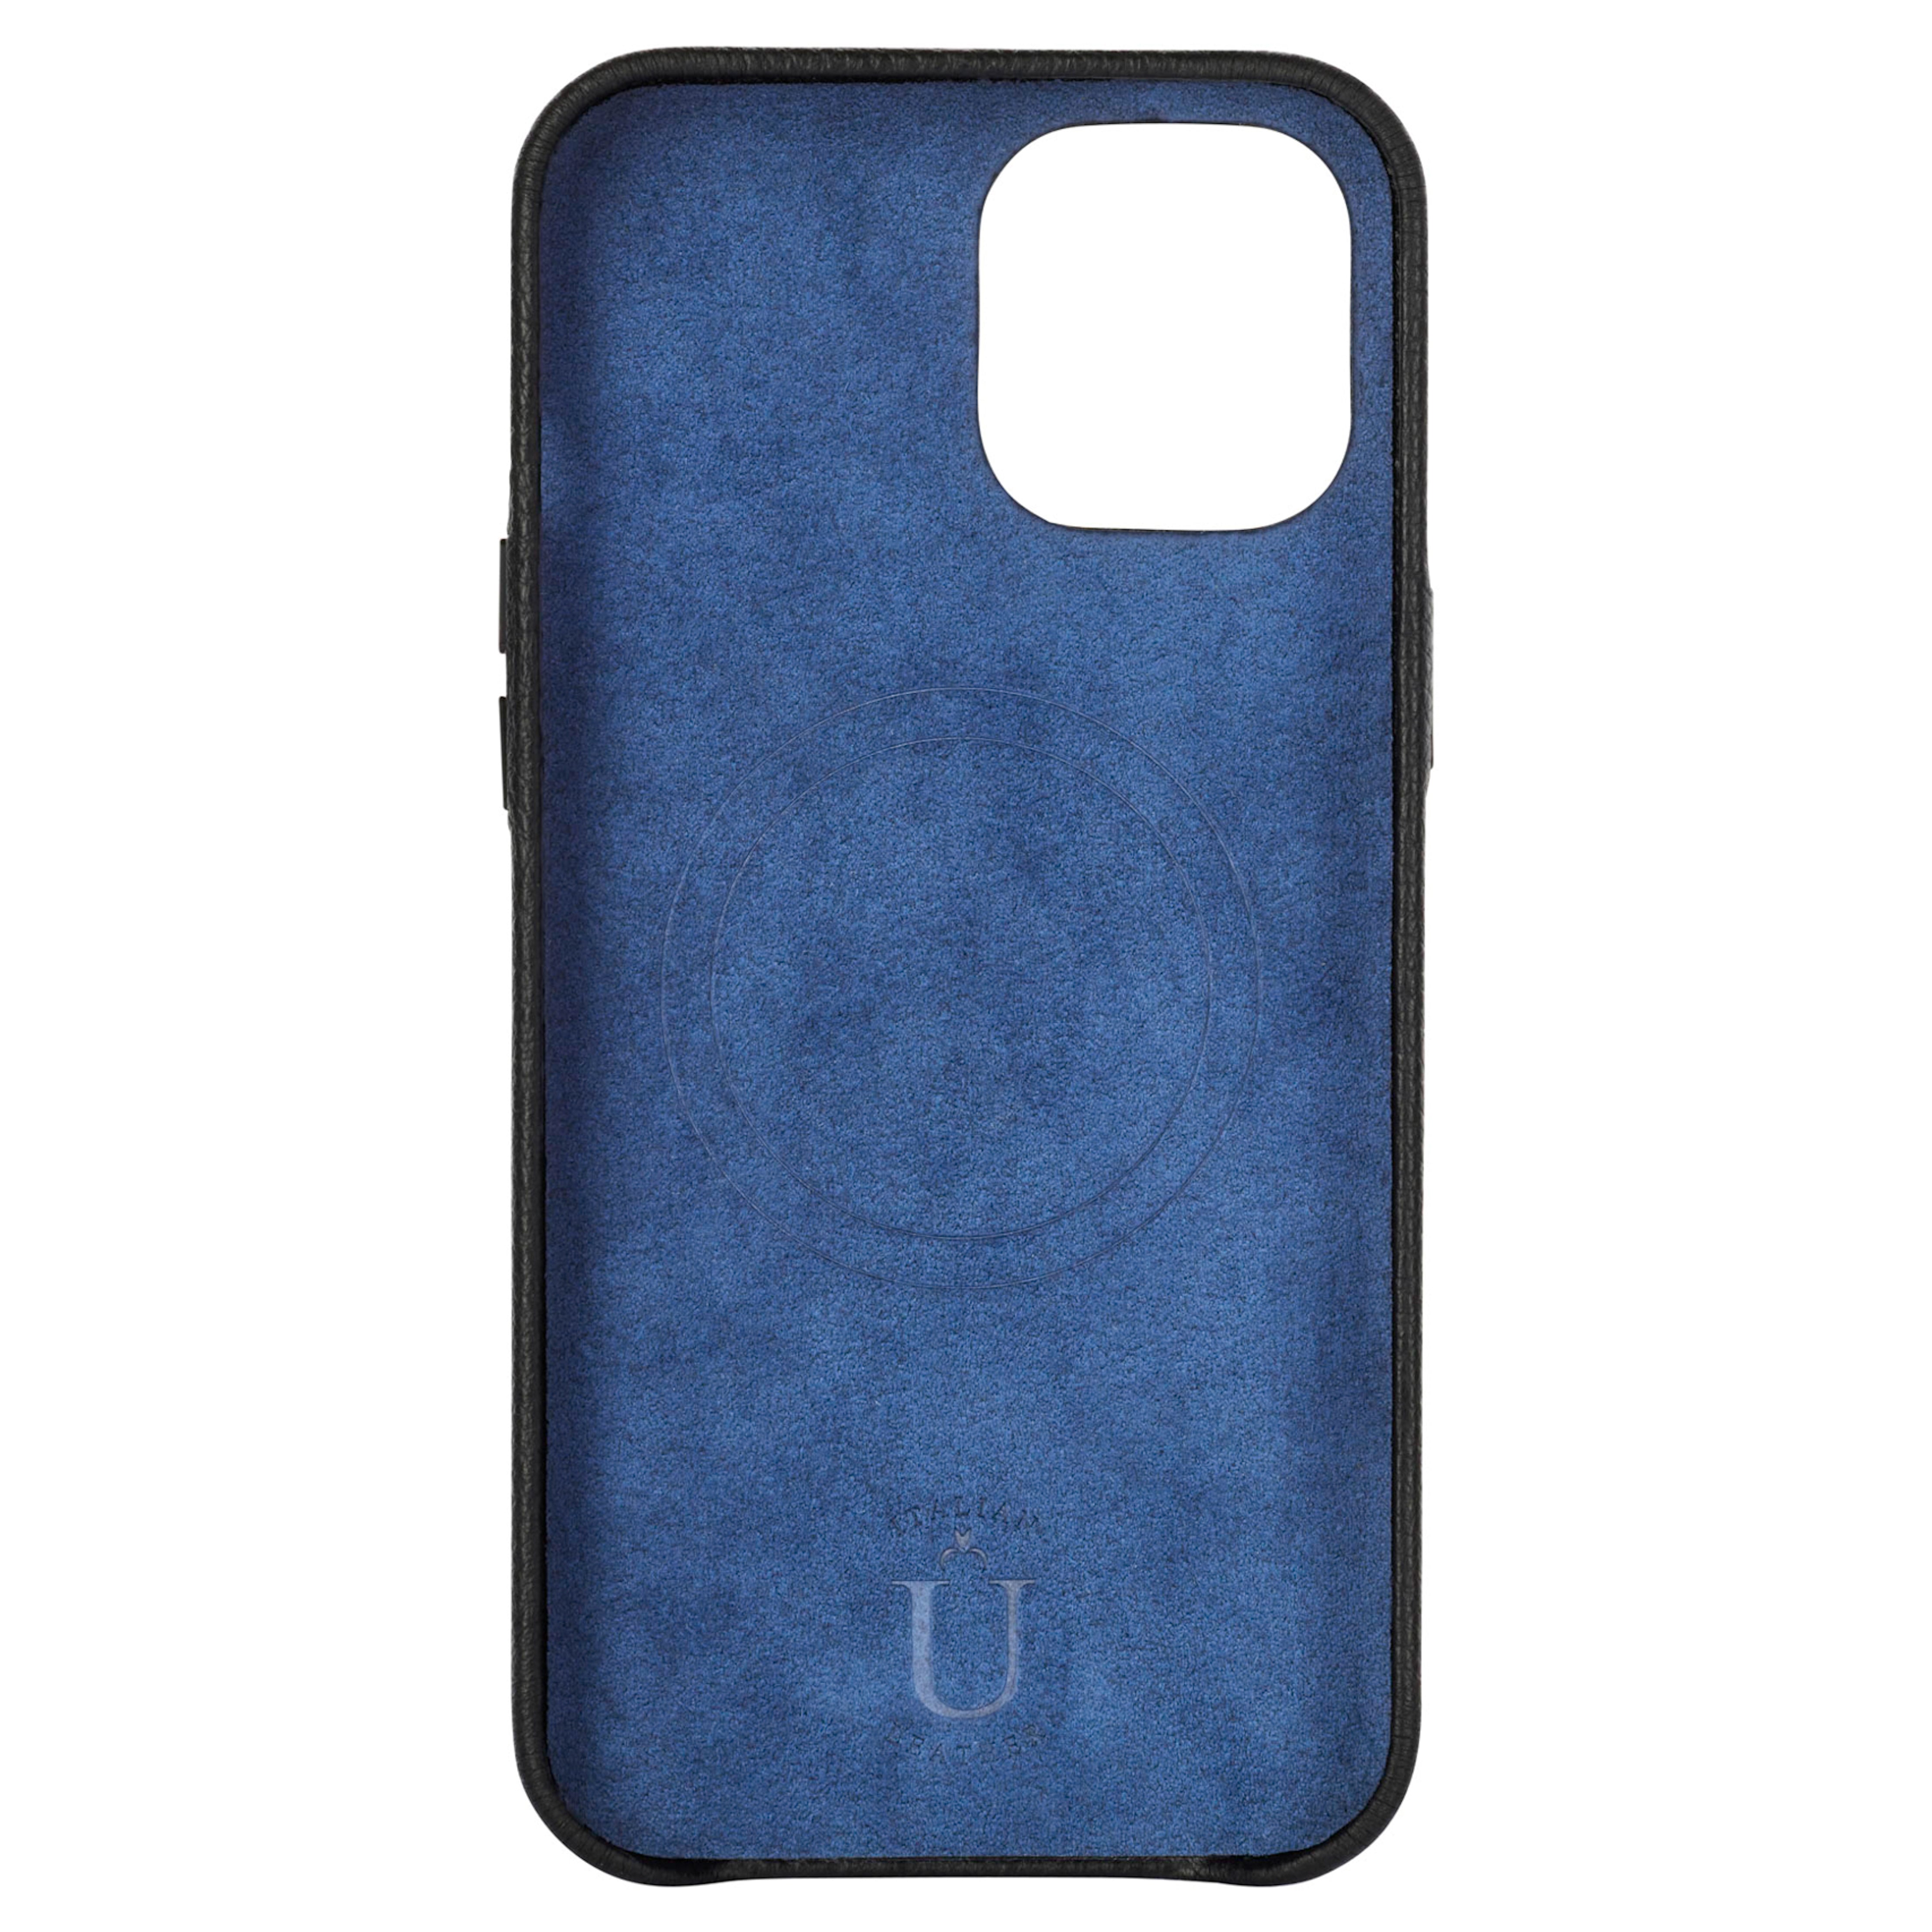 Ubique Italy Luxury iPhone Case 12 Pro Max Pebble Grain Leather Black Inner Lining